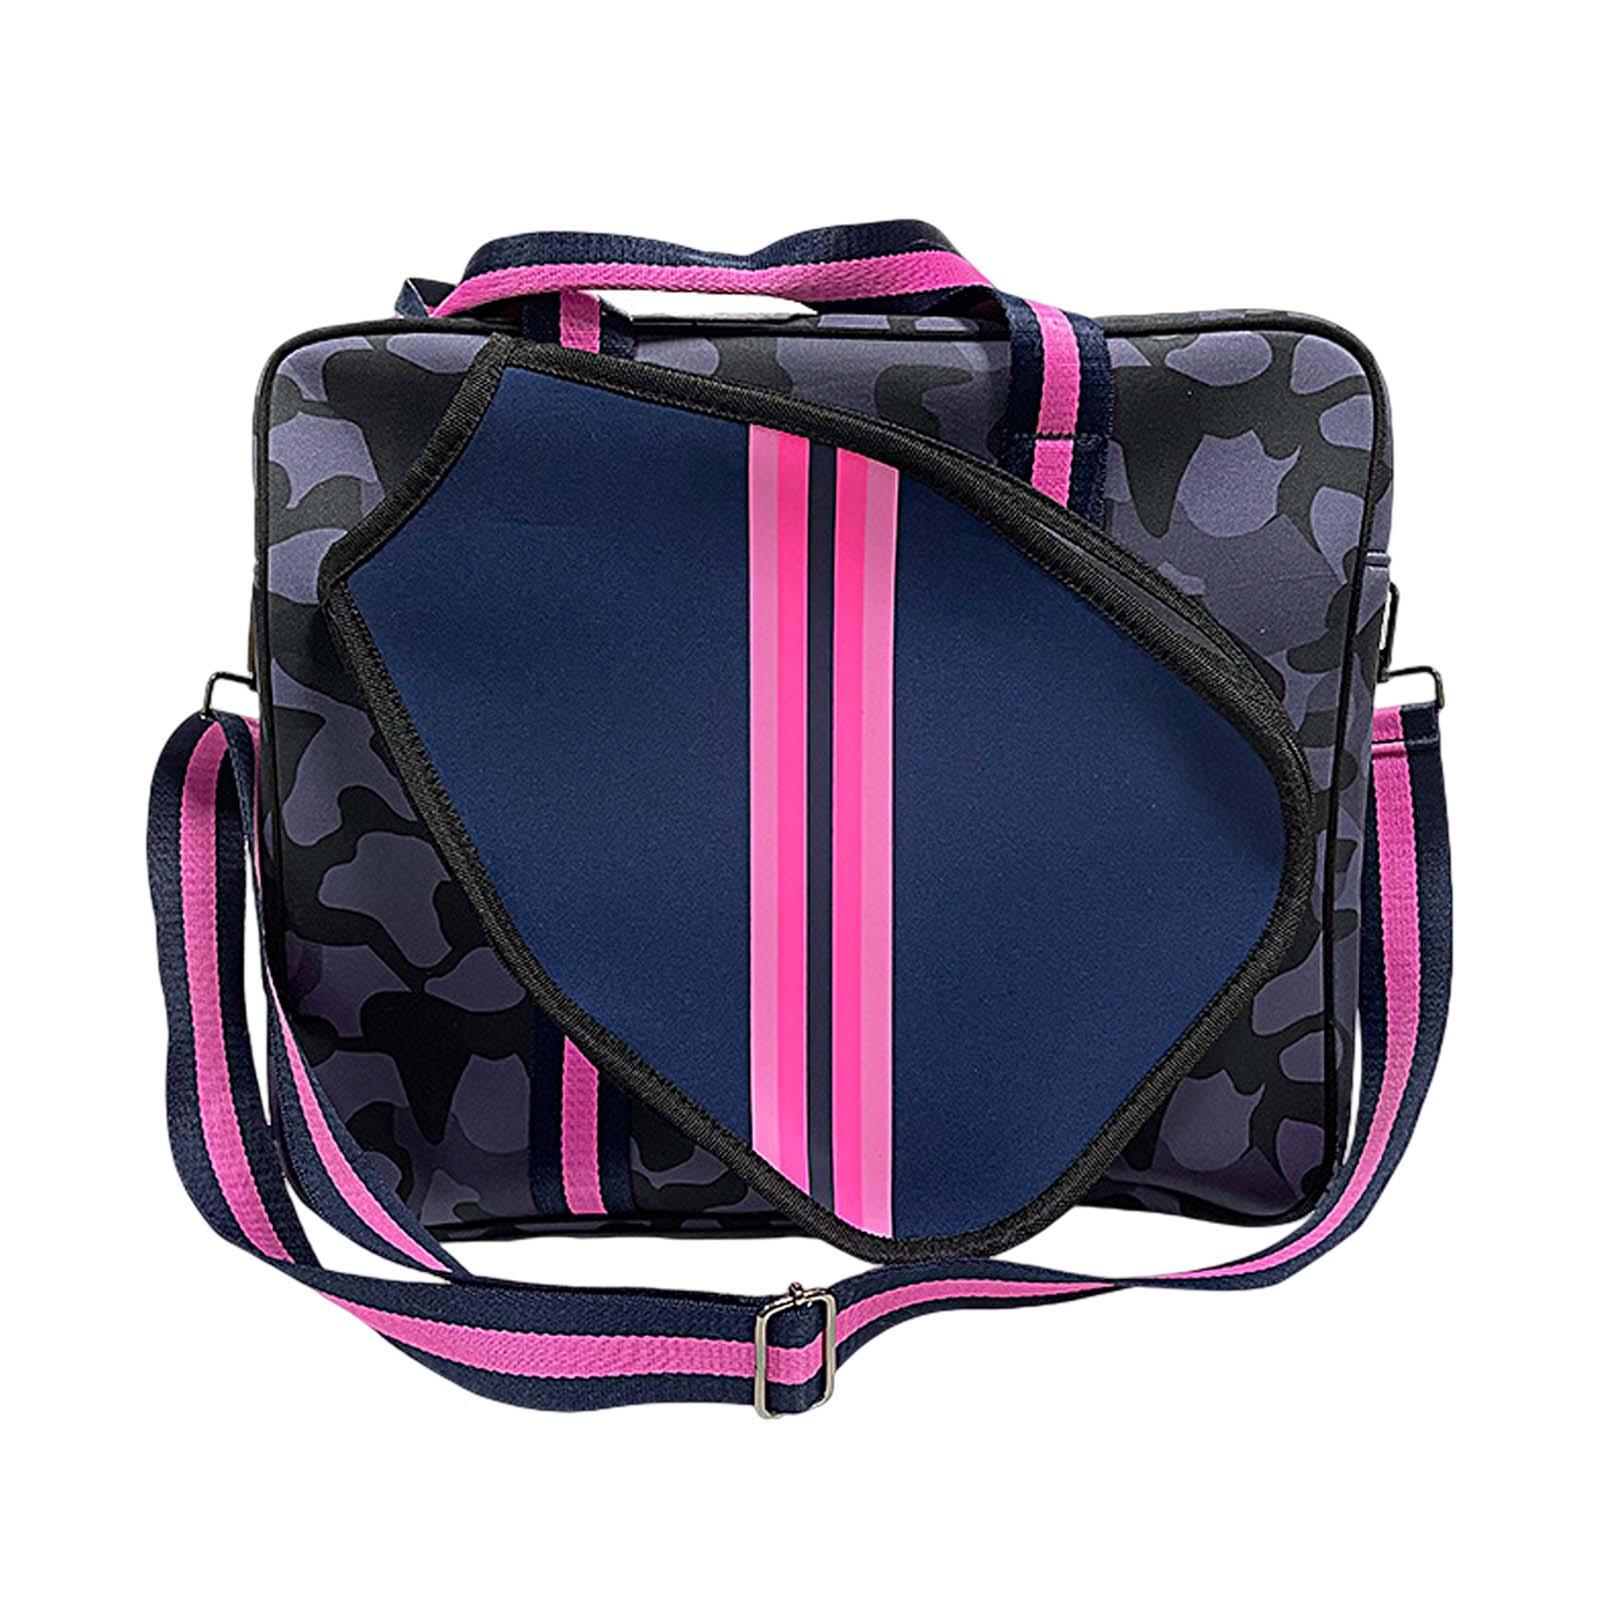 Badminton Bag Carrying Bag Racquet Covers Multifunctional Outdoor Tennis Bag style B